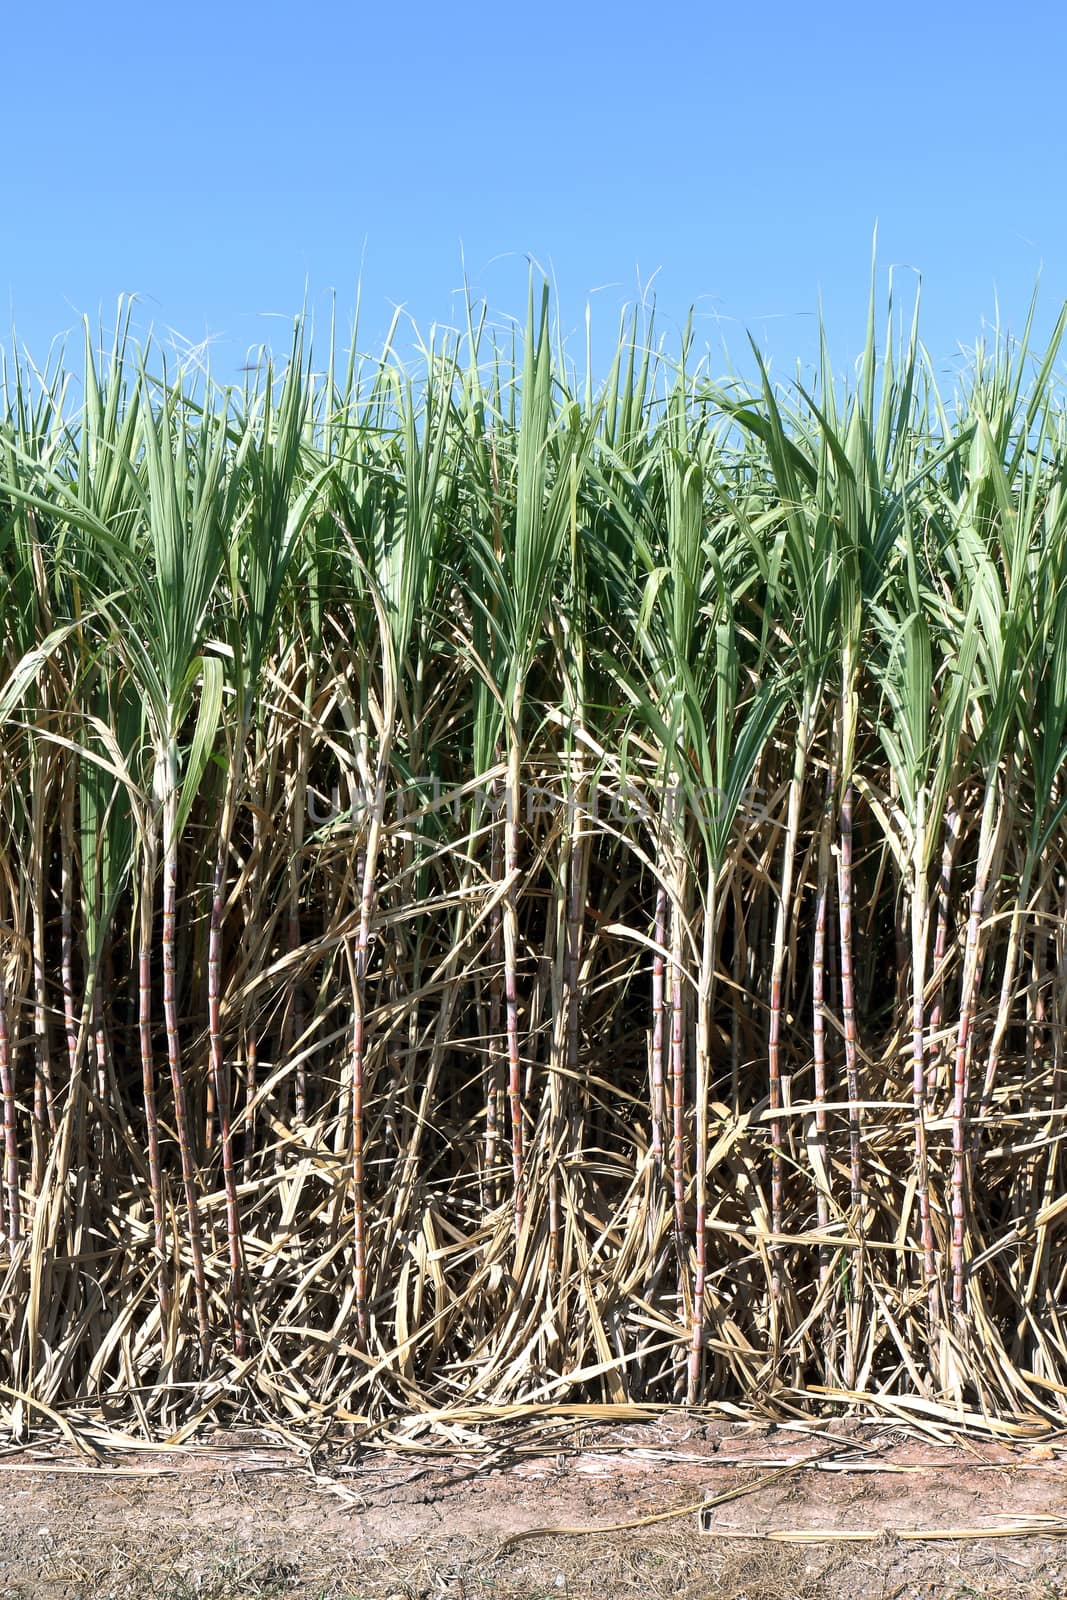 Sugarcane, Sugarcane plants grow in field, Plantation Sugar cane tree farm, Background of sugarcane field